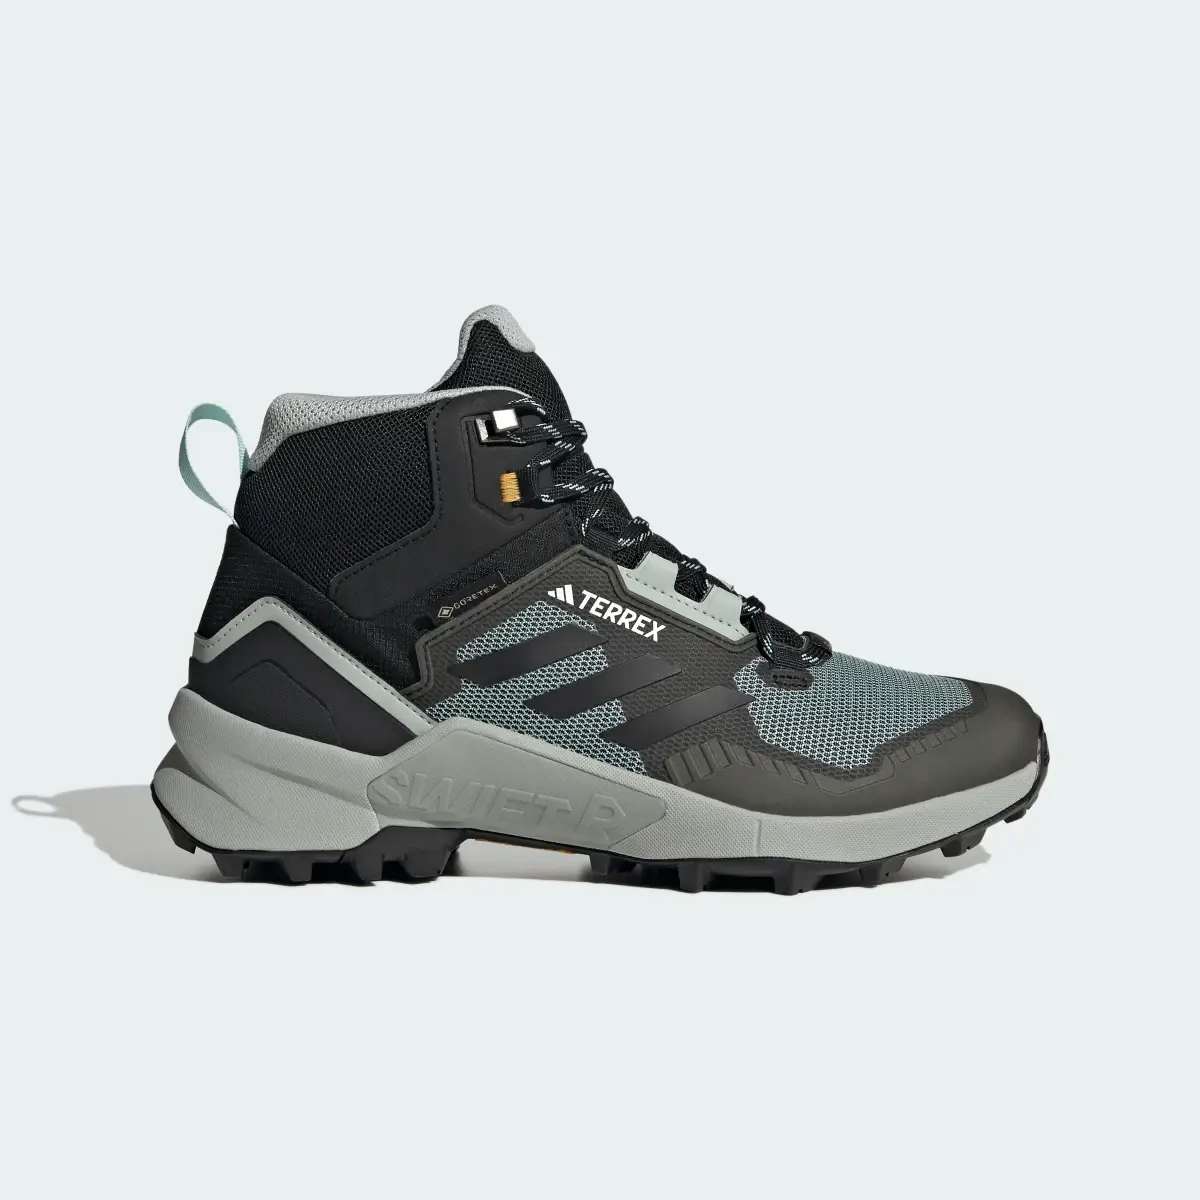 Adidas Chaussure de randonnée Terrex Swift R3 Mid GORE-TEX. 2